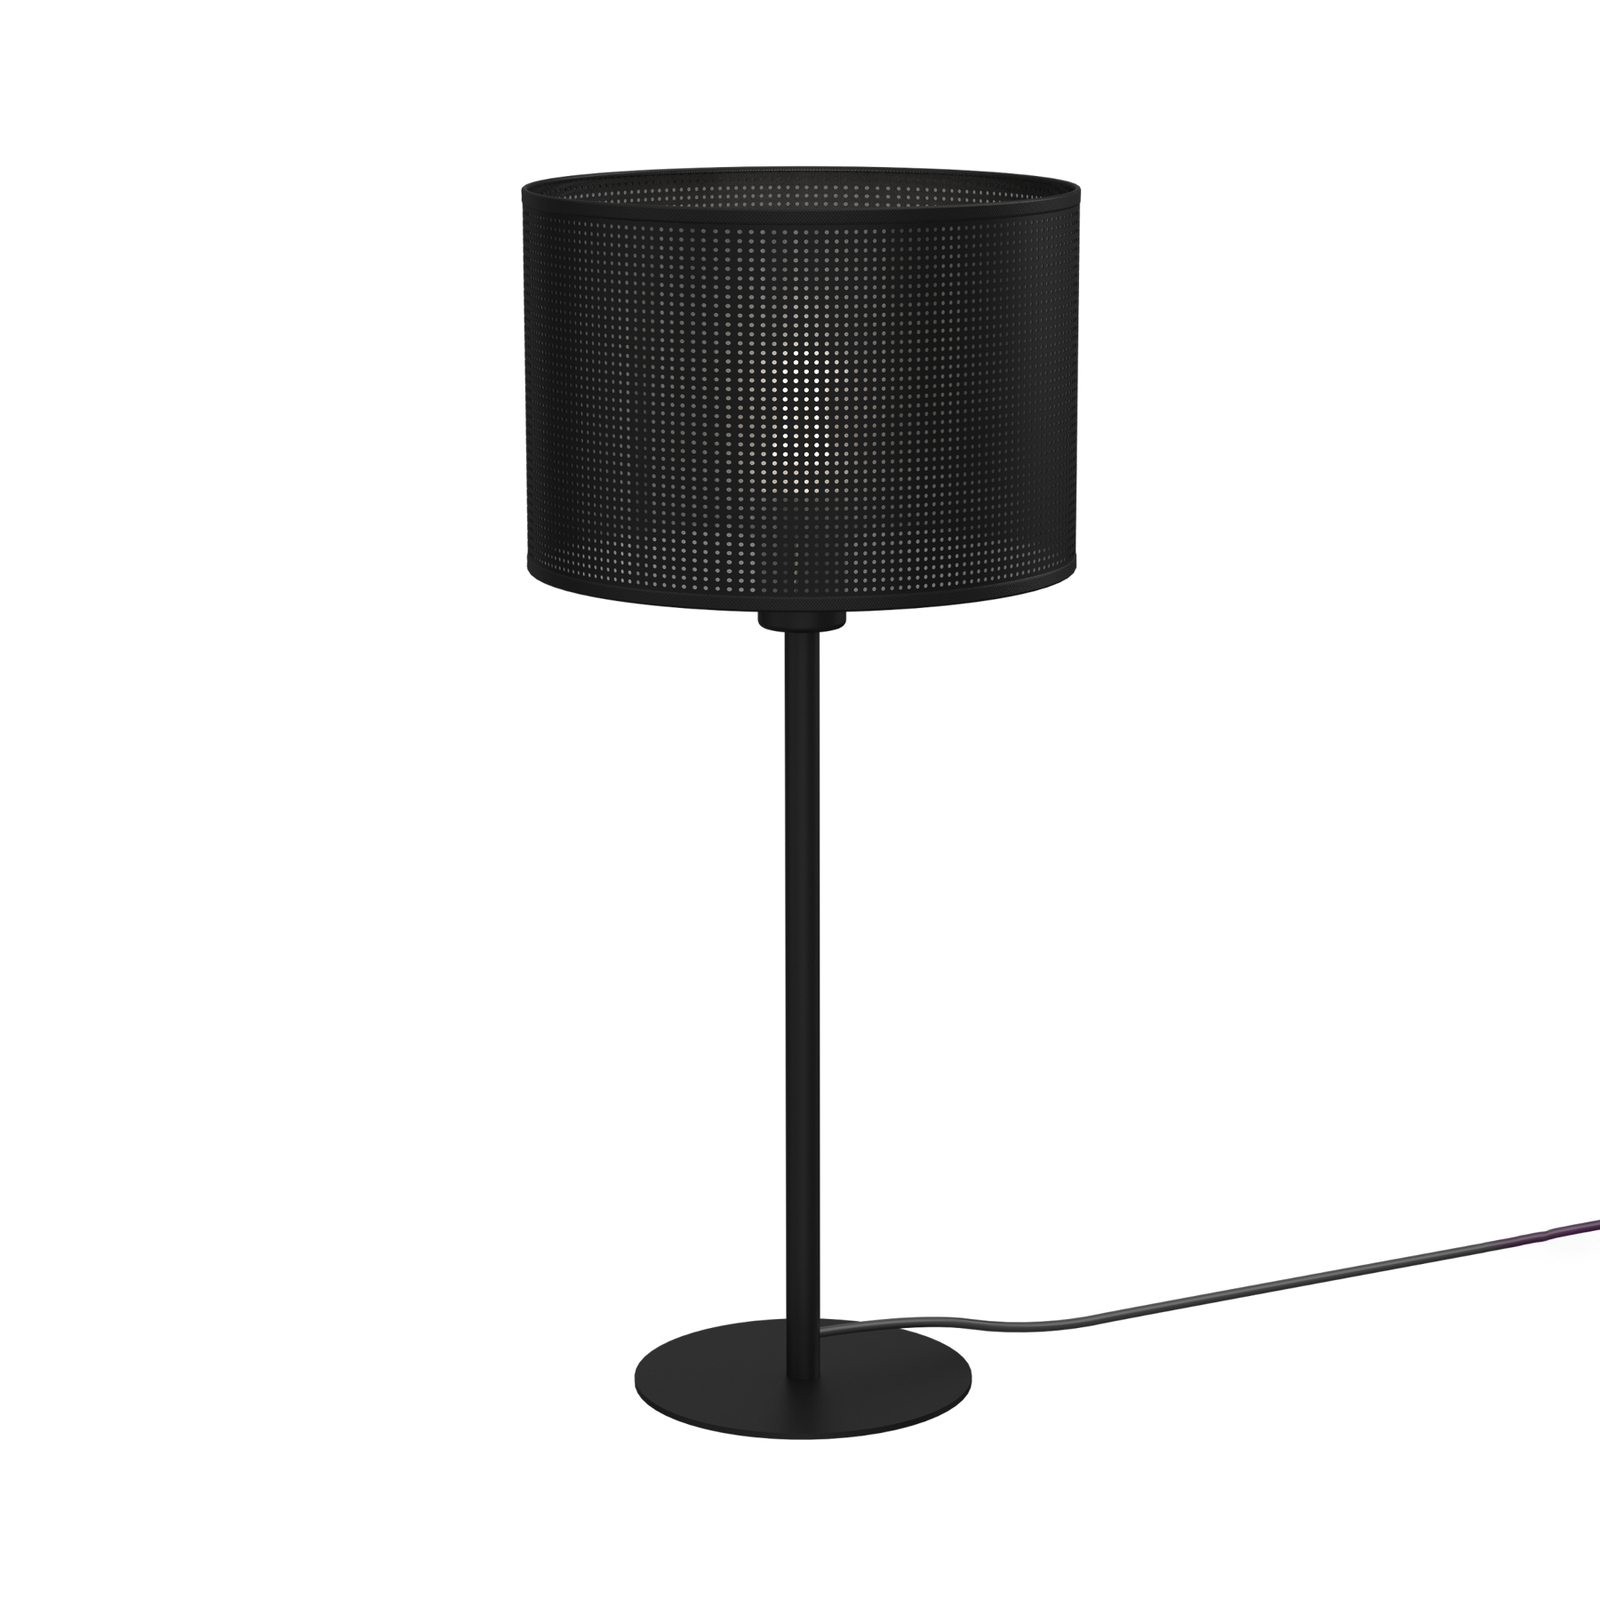 Jovin table lamp, height 56cm, black